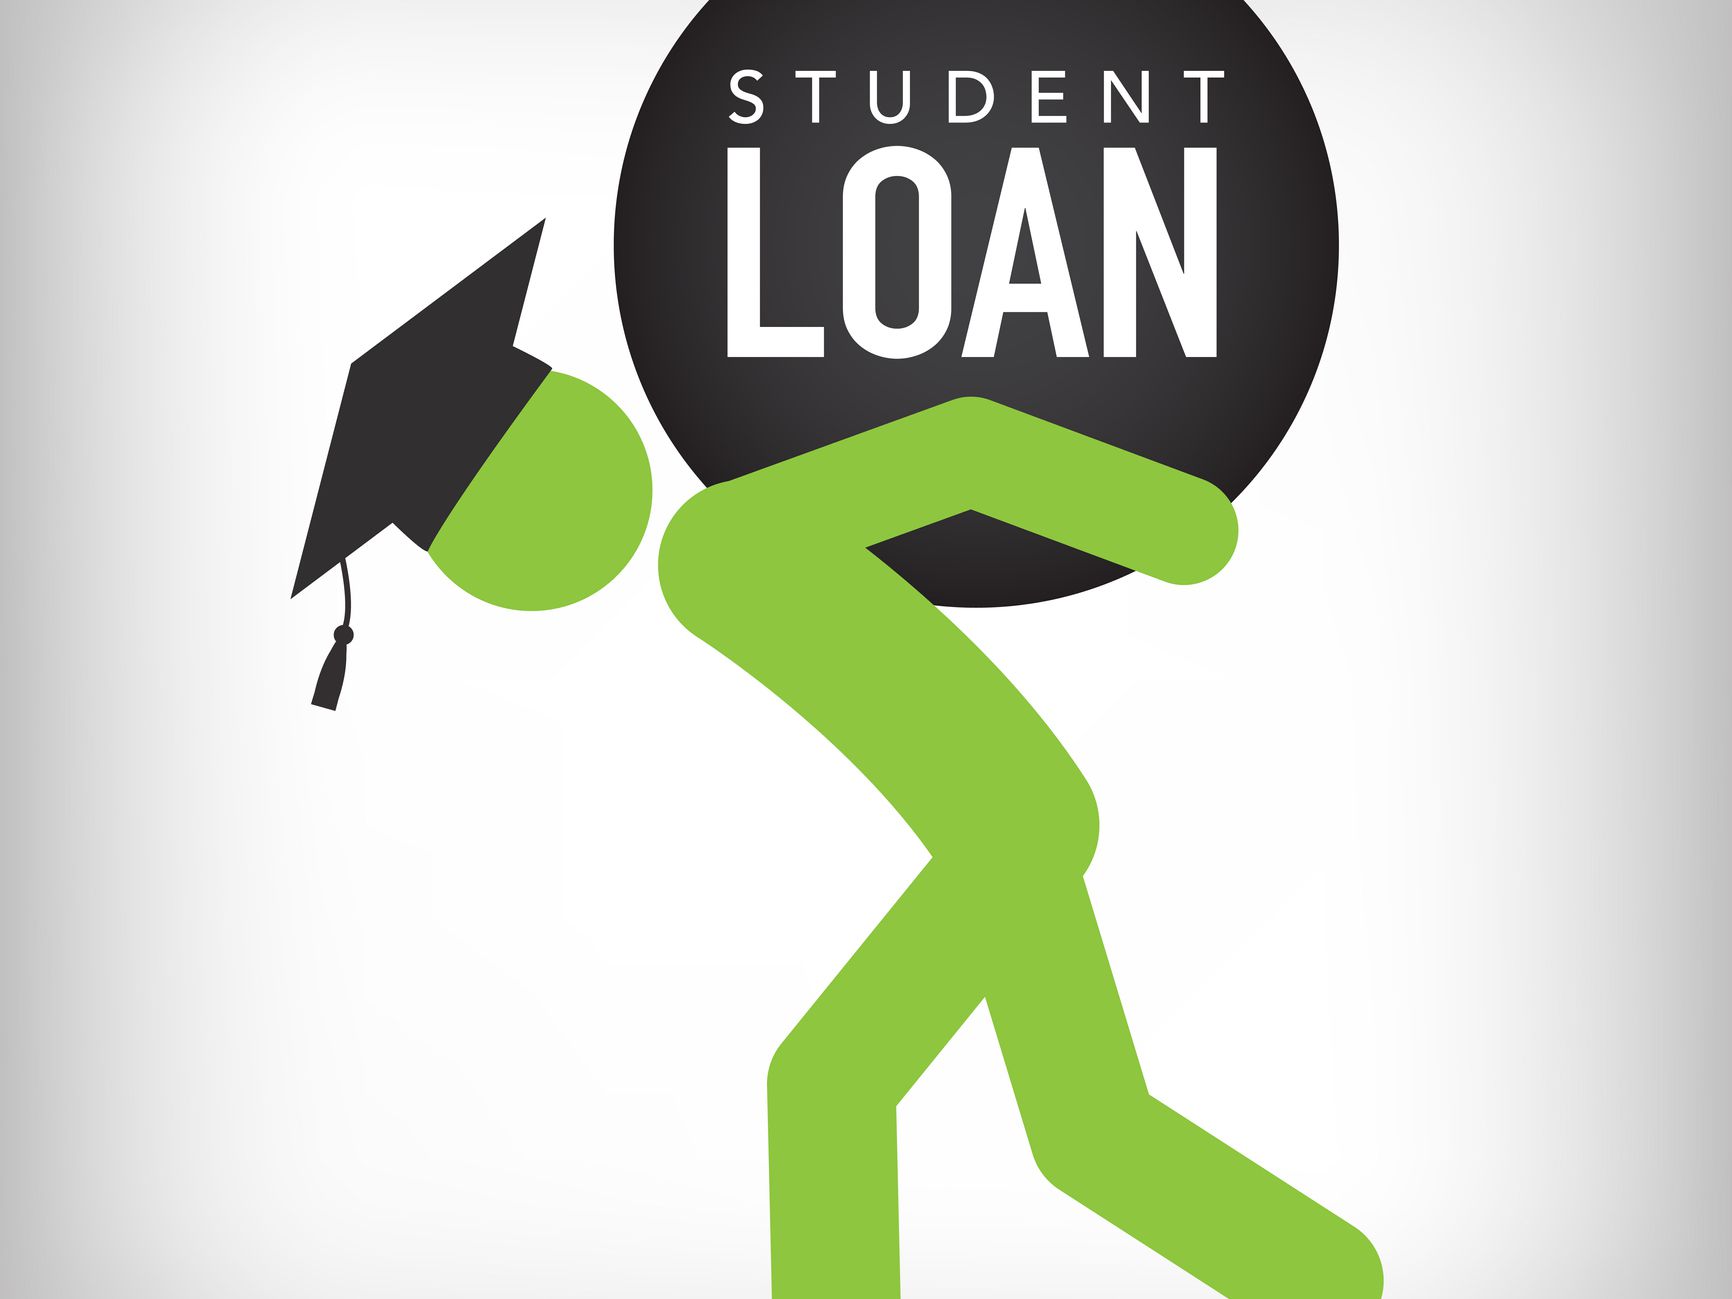 Sbi Student Loan Shop Cheap, Save 62 jlcatj.gob.mx